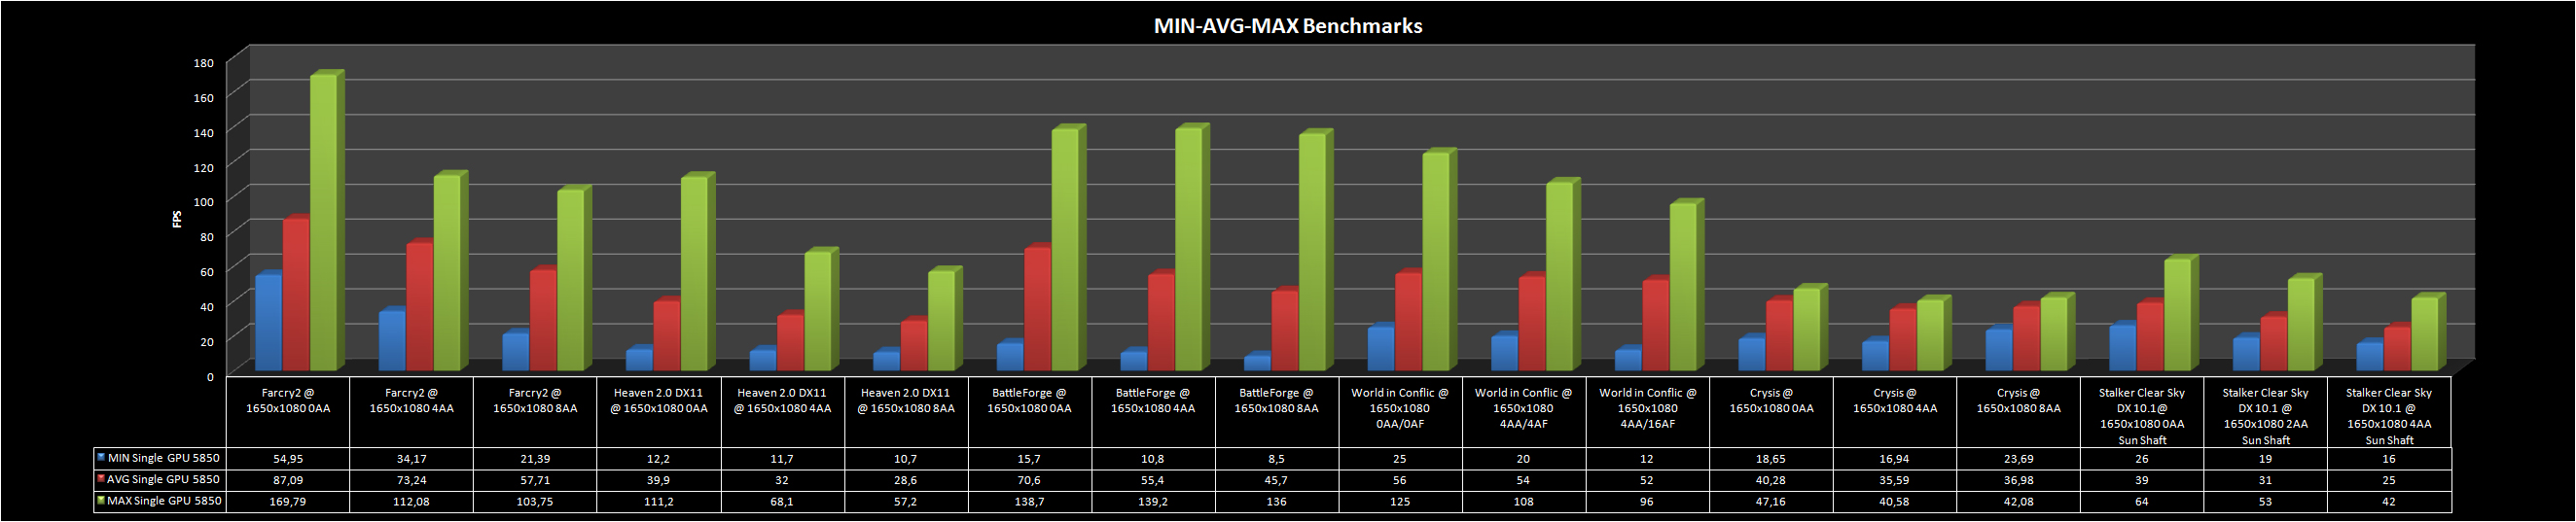 min-avg-max-benchmarks.jpg